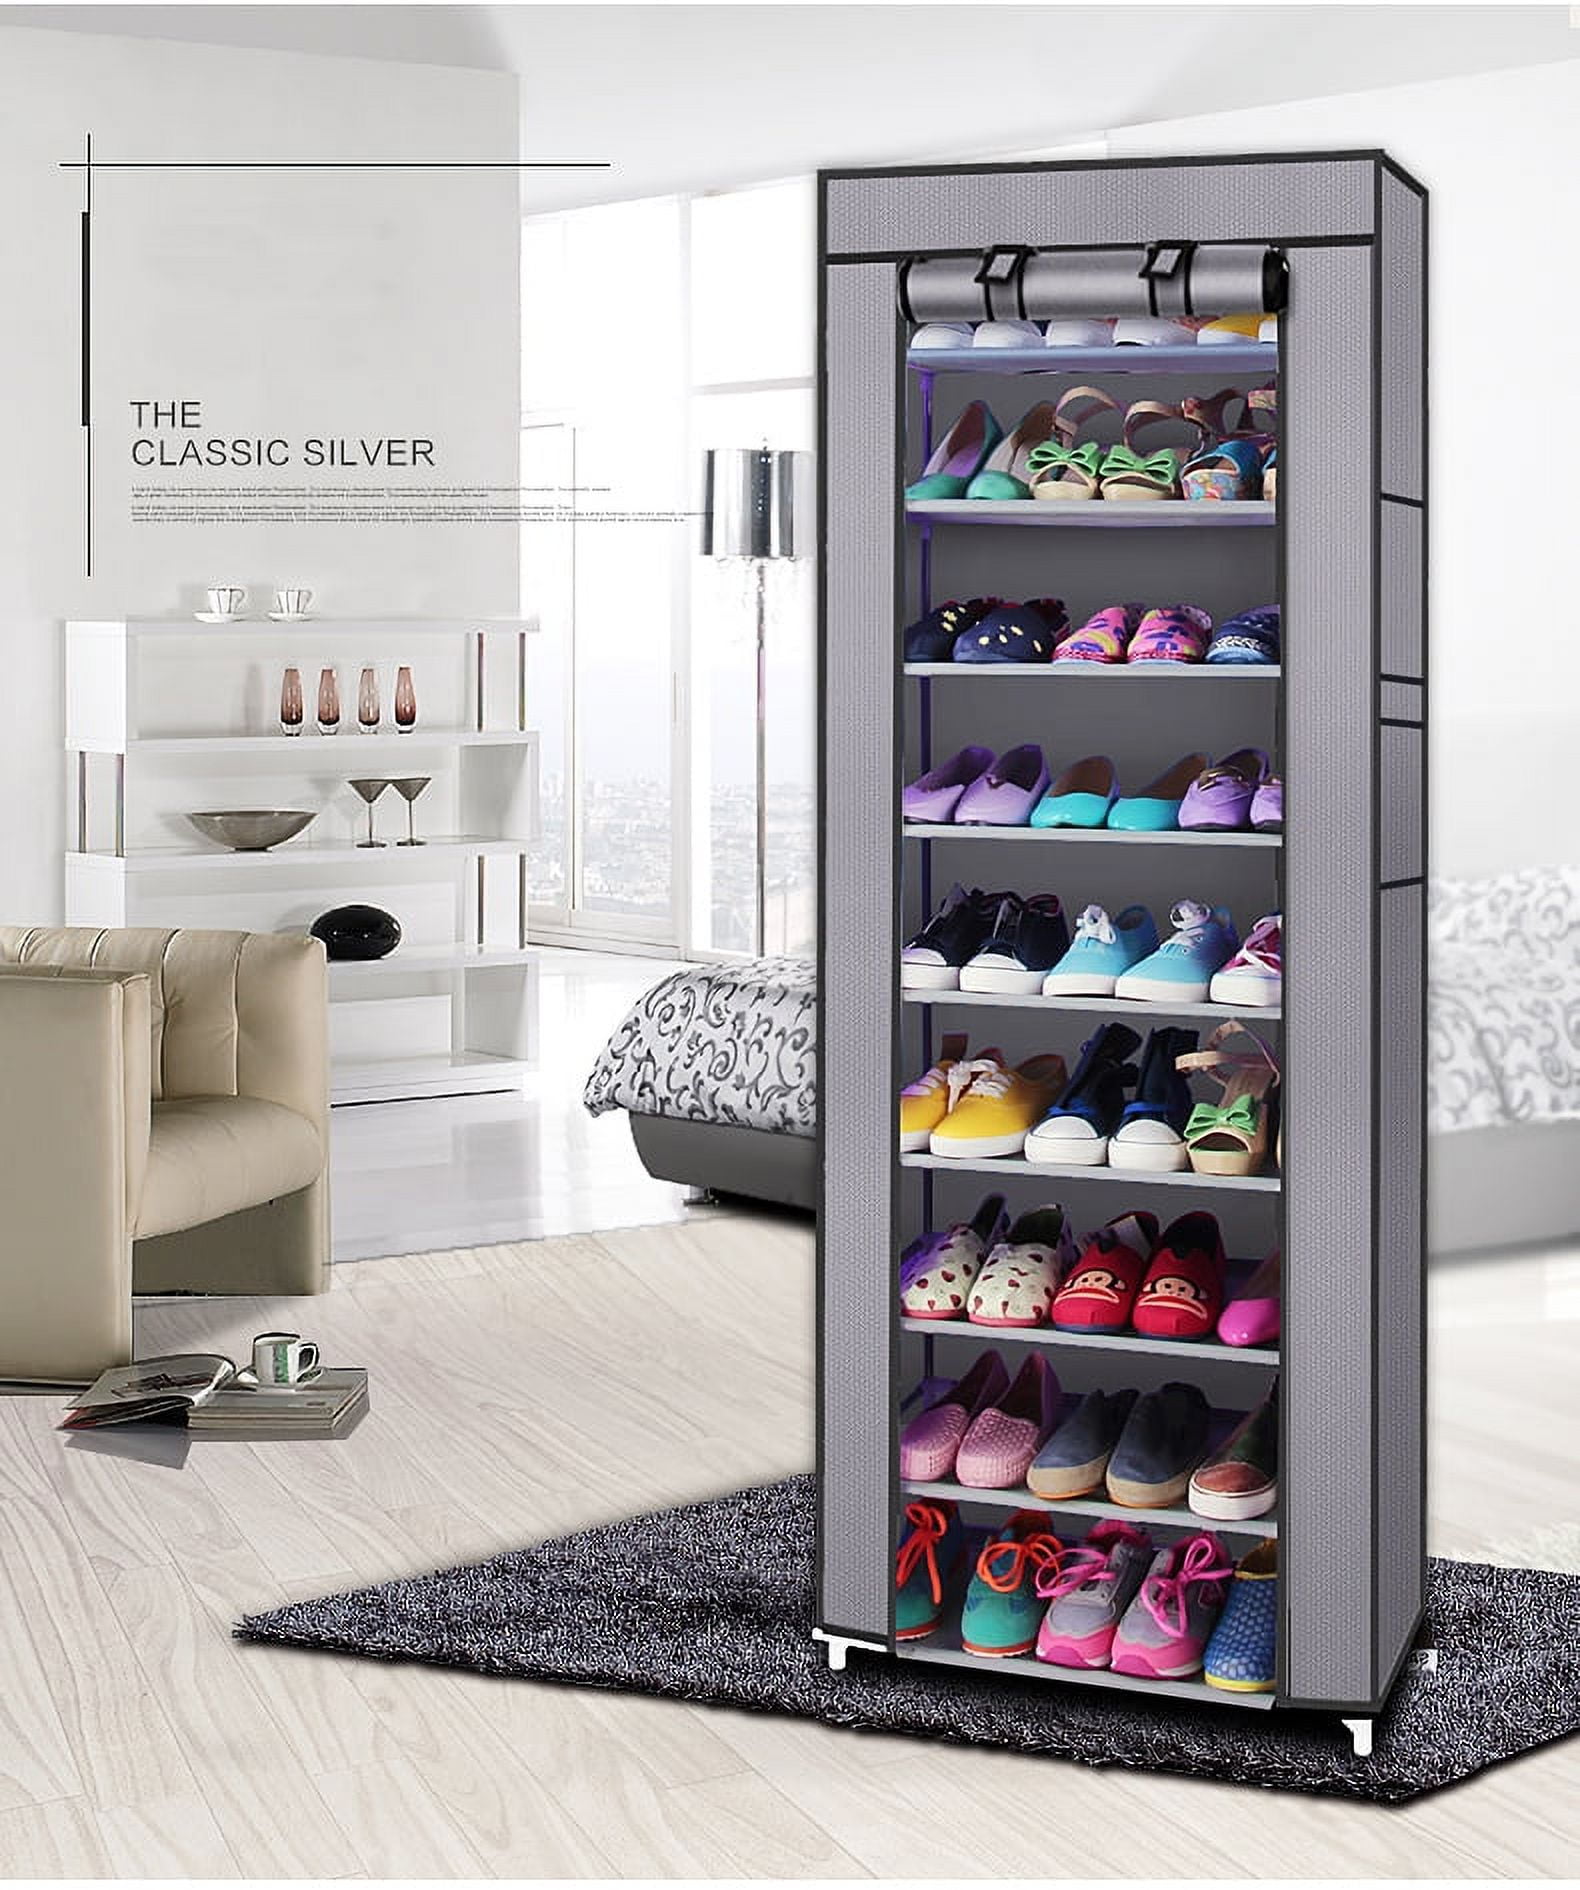 Calmootey 9 Tier Shoe Rack Organizer,Portable Shoe Shelf with Nonwoven  Fabric Cover for Closet Hallway,Bedroom,Entryway,Grey